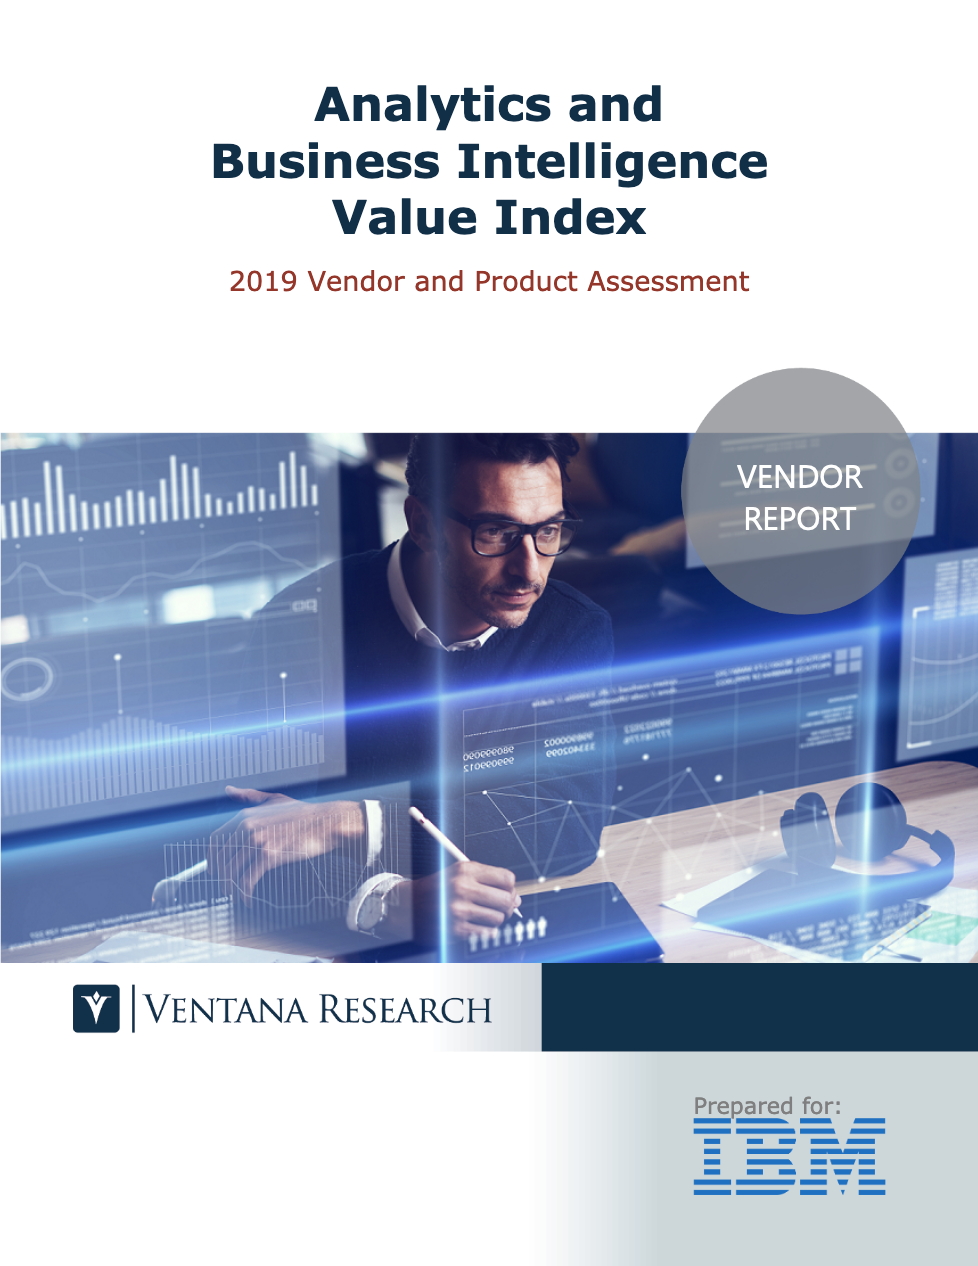 ventana research value index analytics and bi vendor report 2019 ibm 57023857USEN - Analytics and Business Intelligence Value Index - Ventana Research